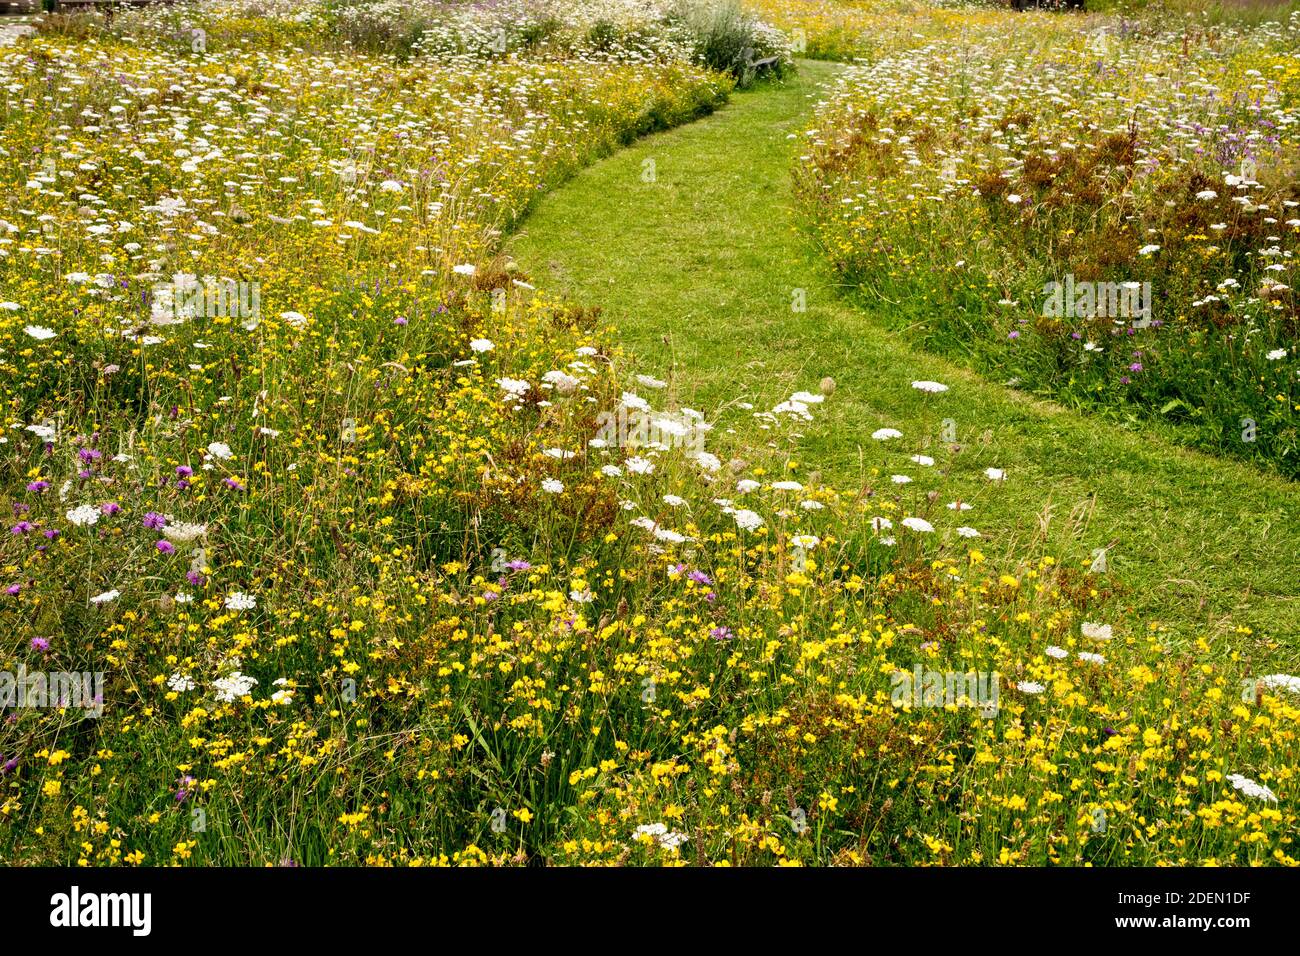 Nature garden with wild herbs Stock Photo